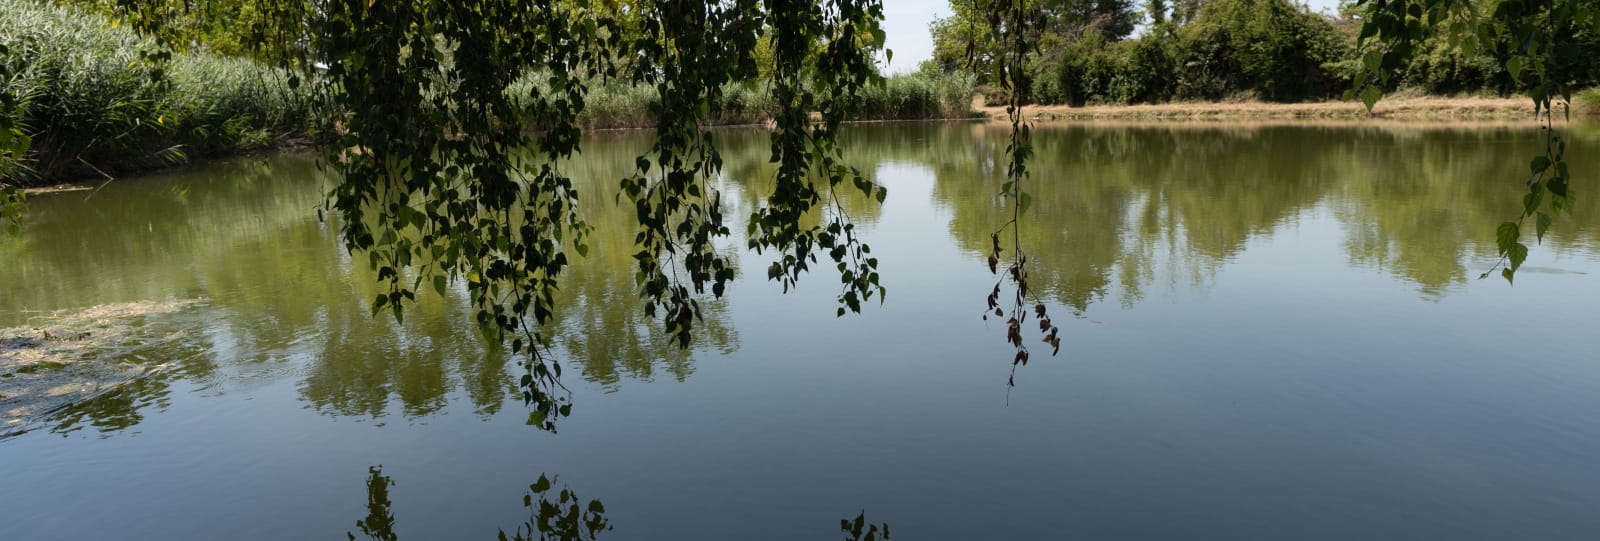 Chaleyre ponds